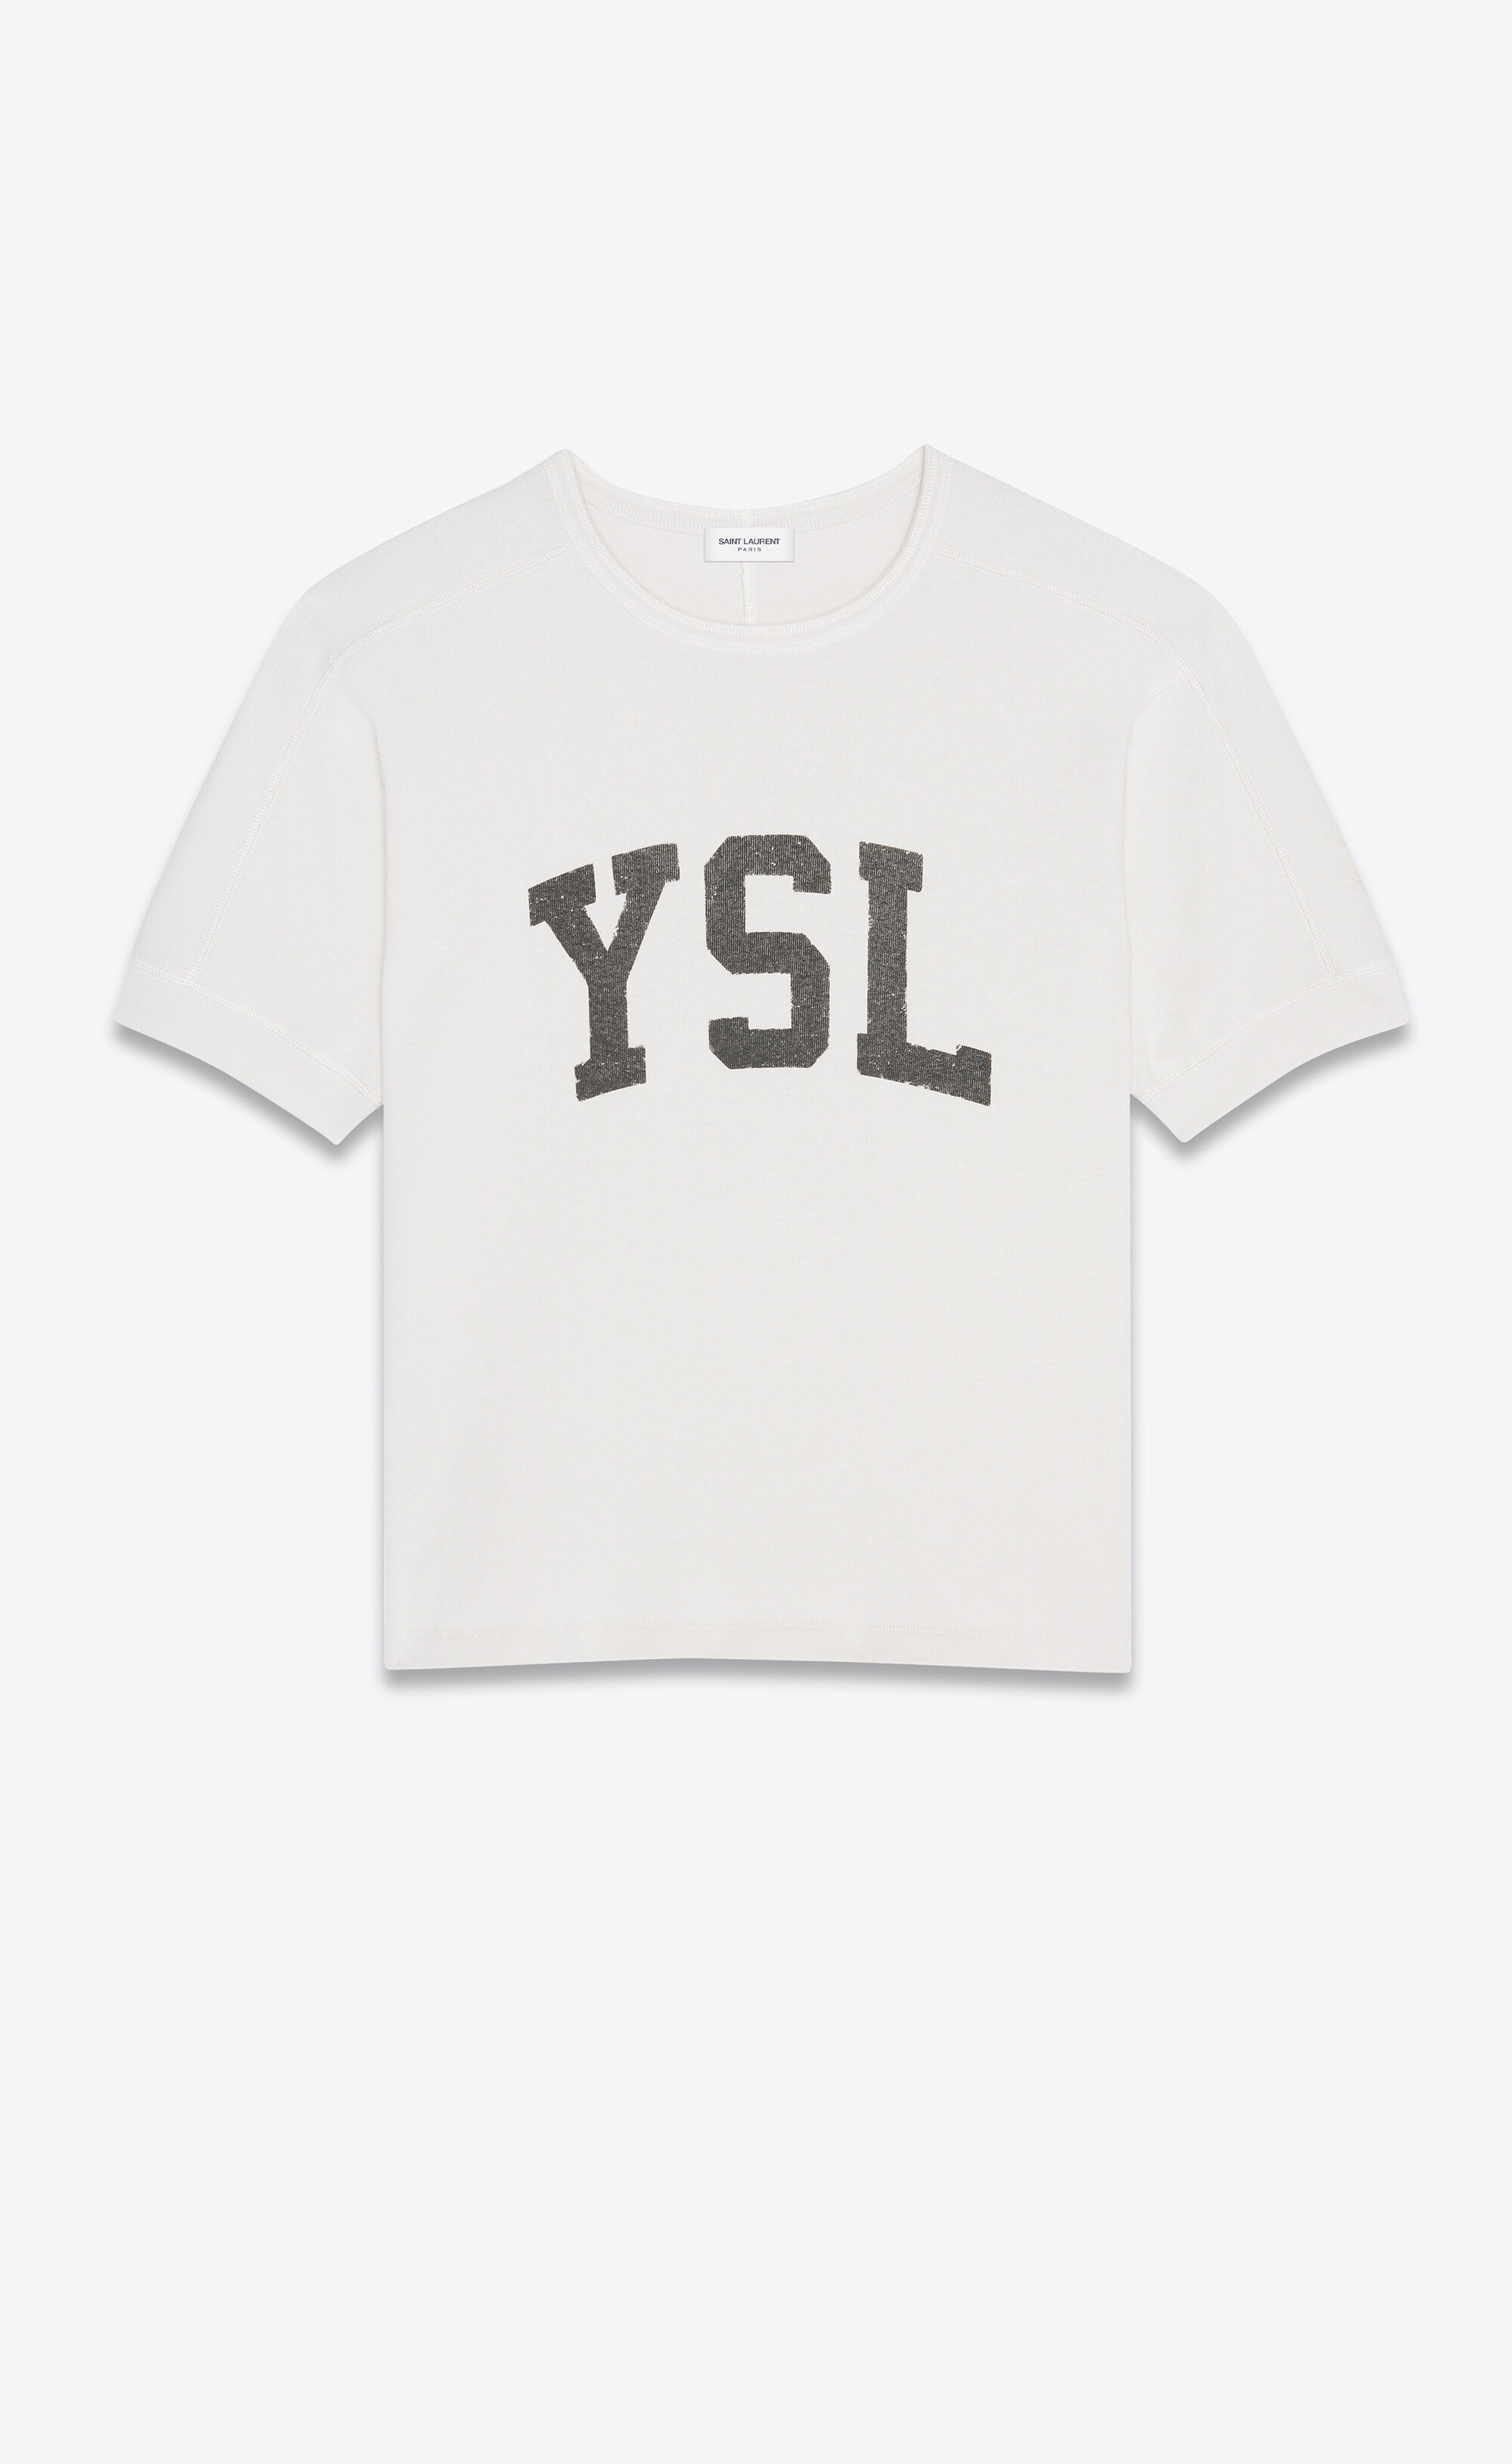 ysl vintage t-shirt - 1